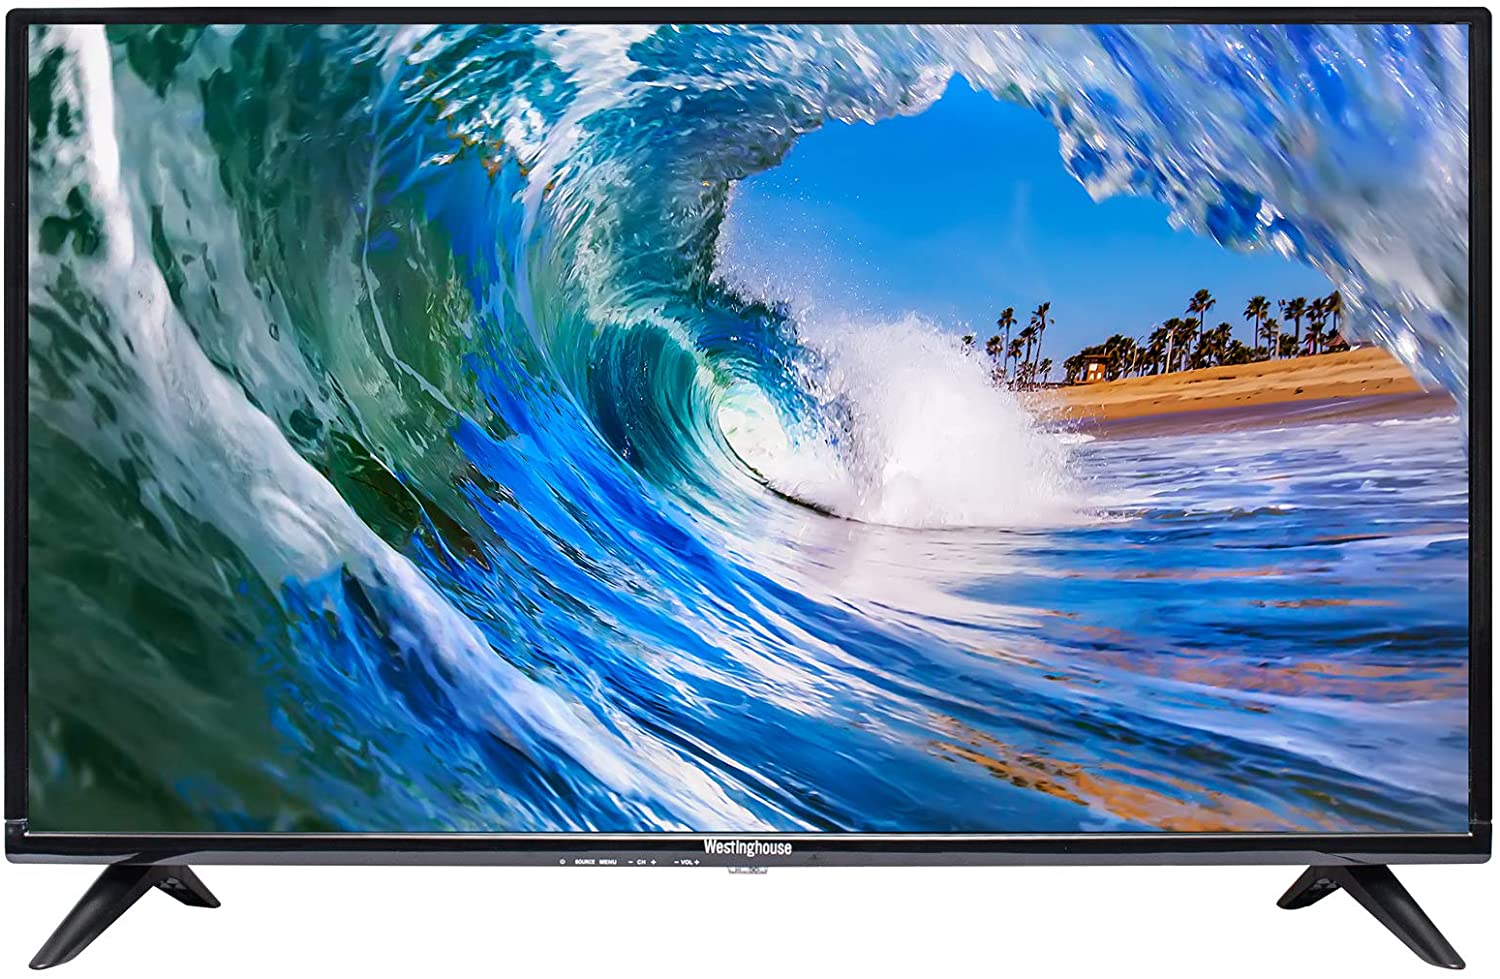 Westinghouse 720p 60Hz LED HD TV, 32-Inch